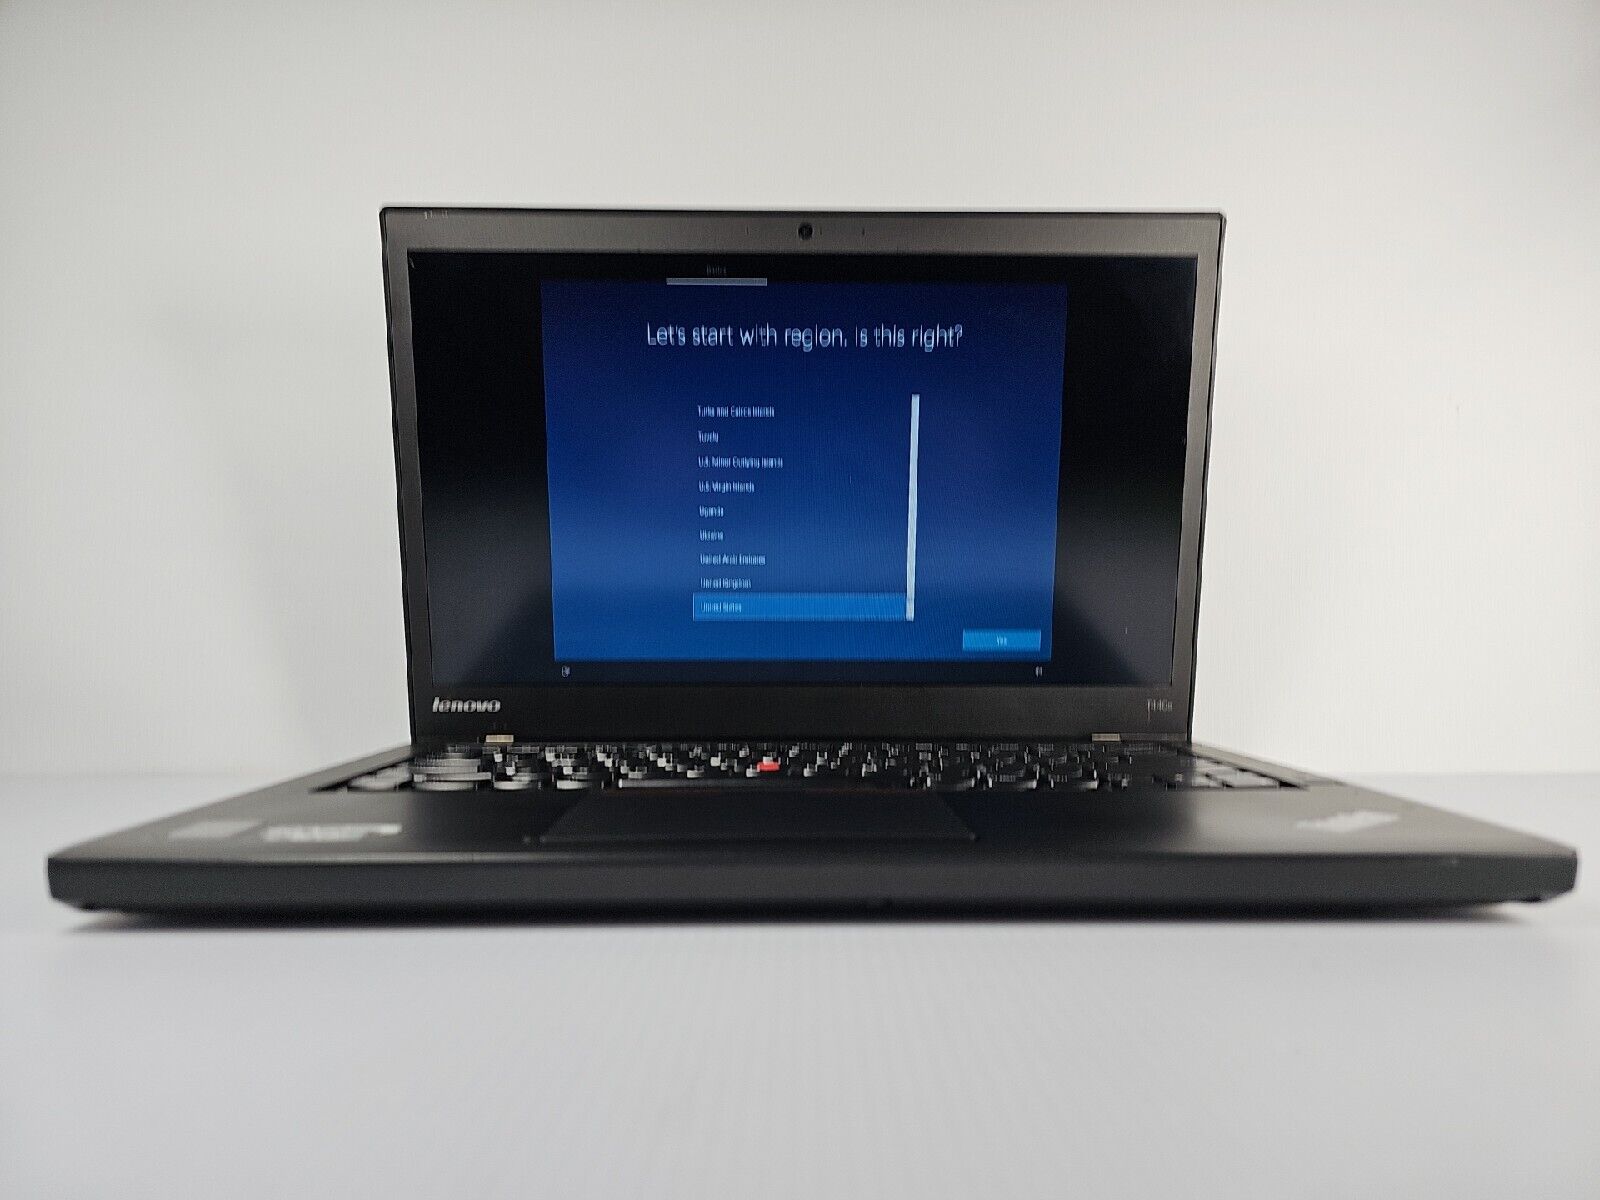 LENOVO ThinkPad T440s i5-4300u 1.9GHz 4GB 256GB SSD  Webcam 10 Laptop